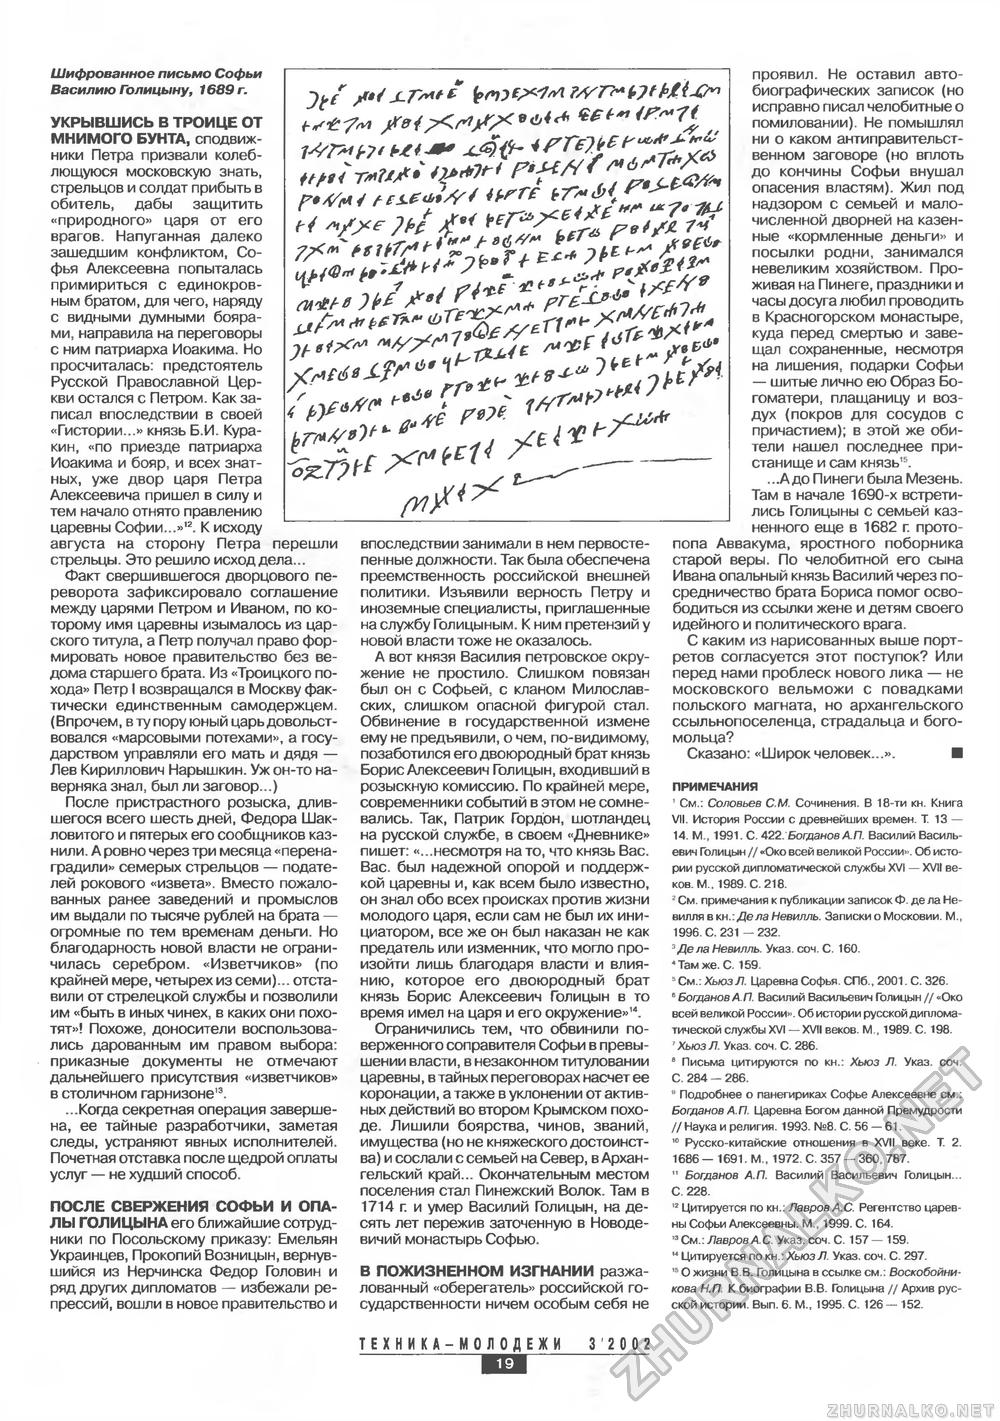 Техника - молодёжи 2002-03, страница 21